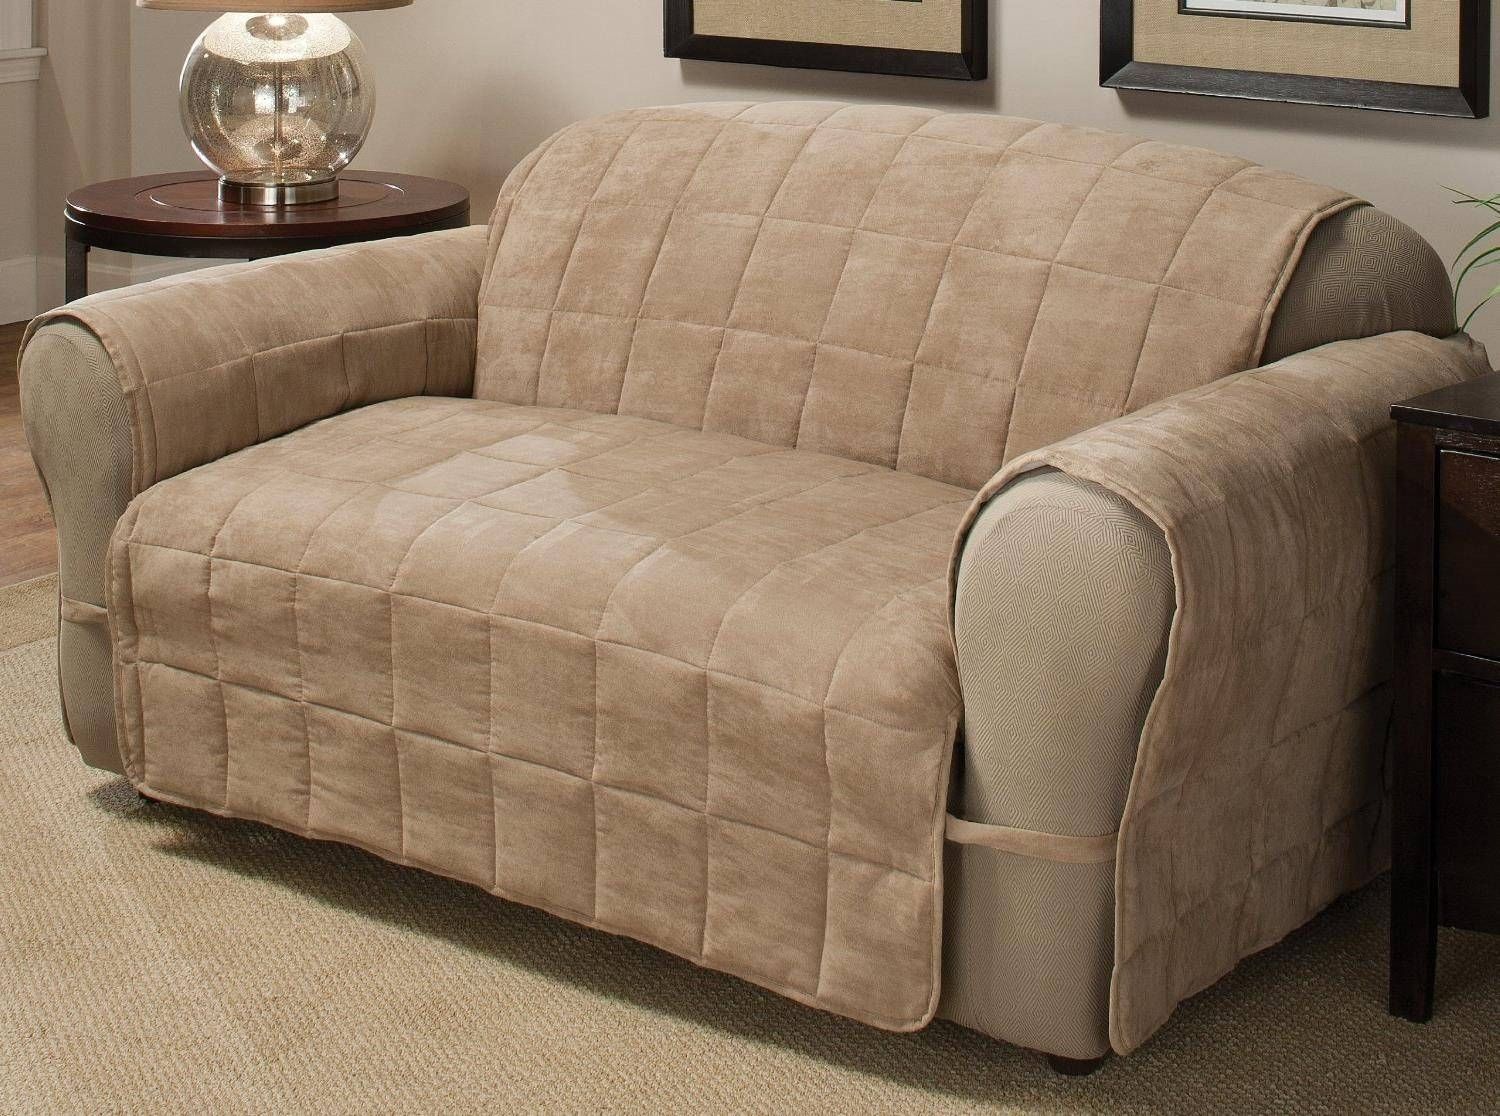 sofa cover for leather sofa